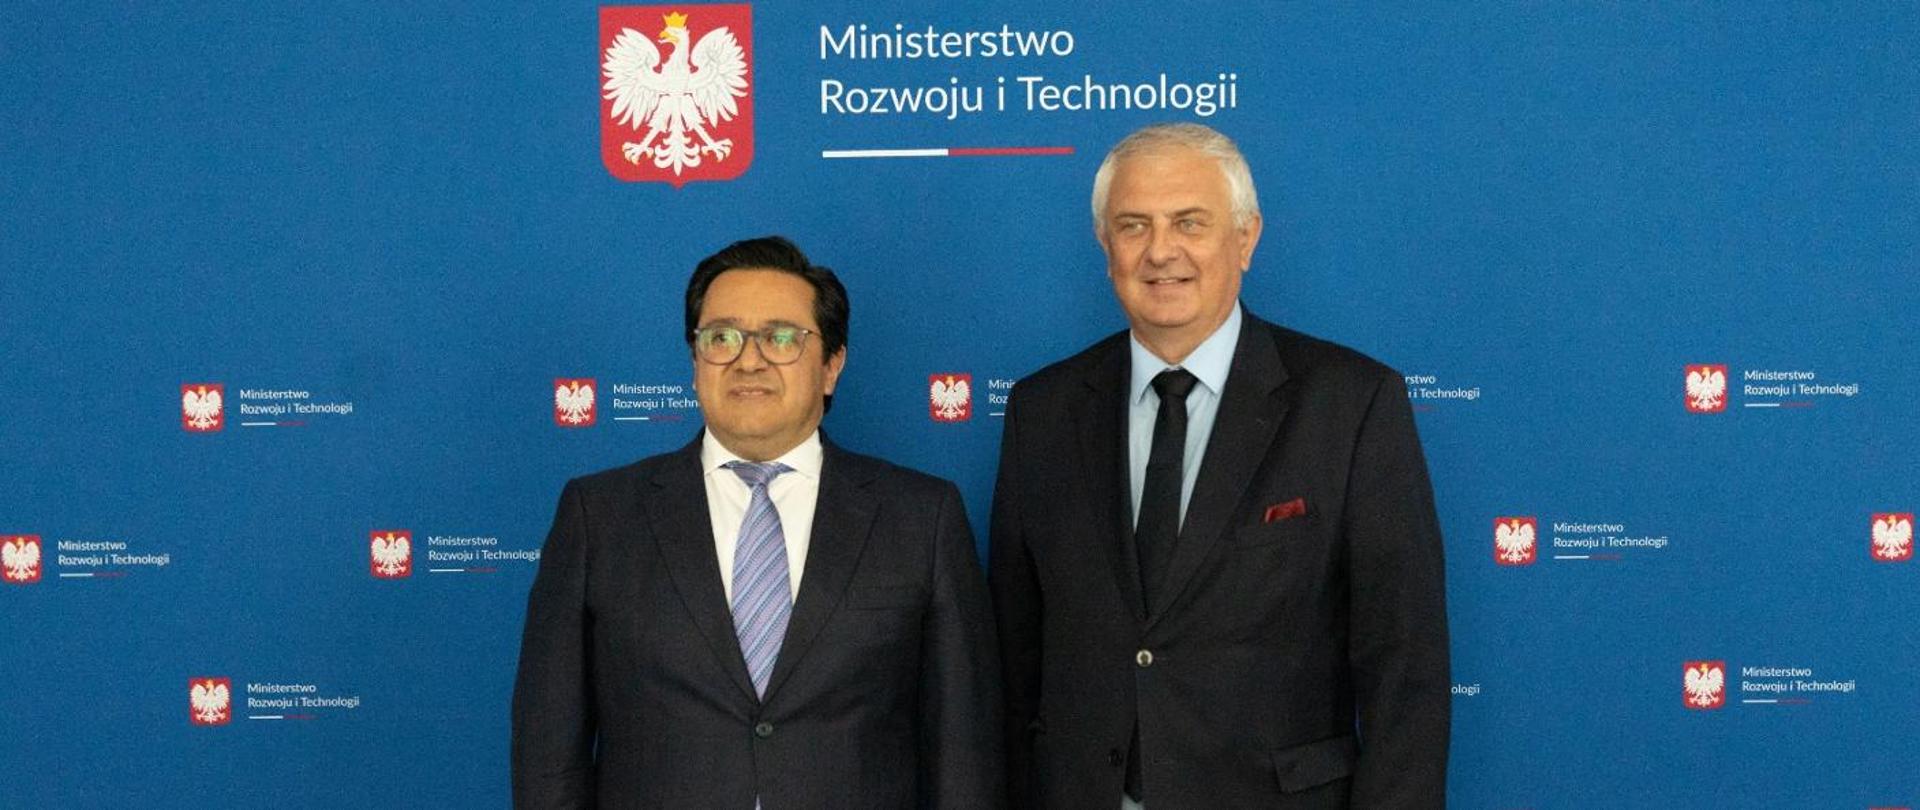 Deputy Minister of Economic Development and Technology Grzegorz Piechowiak and Ambassador Juan Sandoval Mendiolea